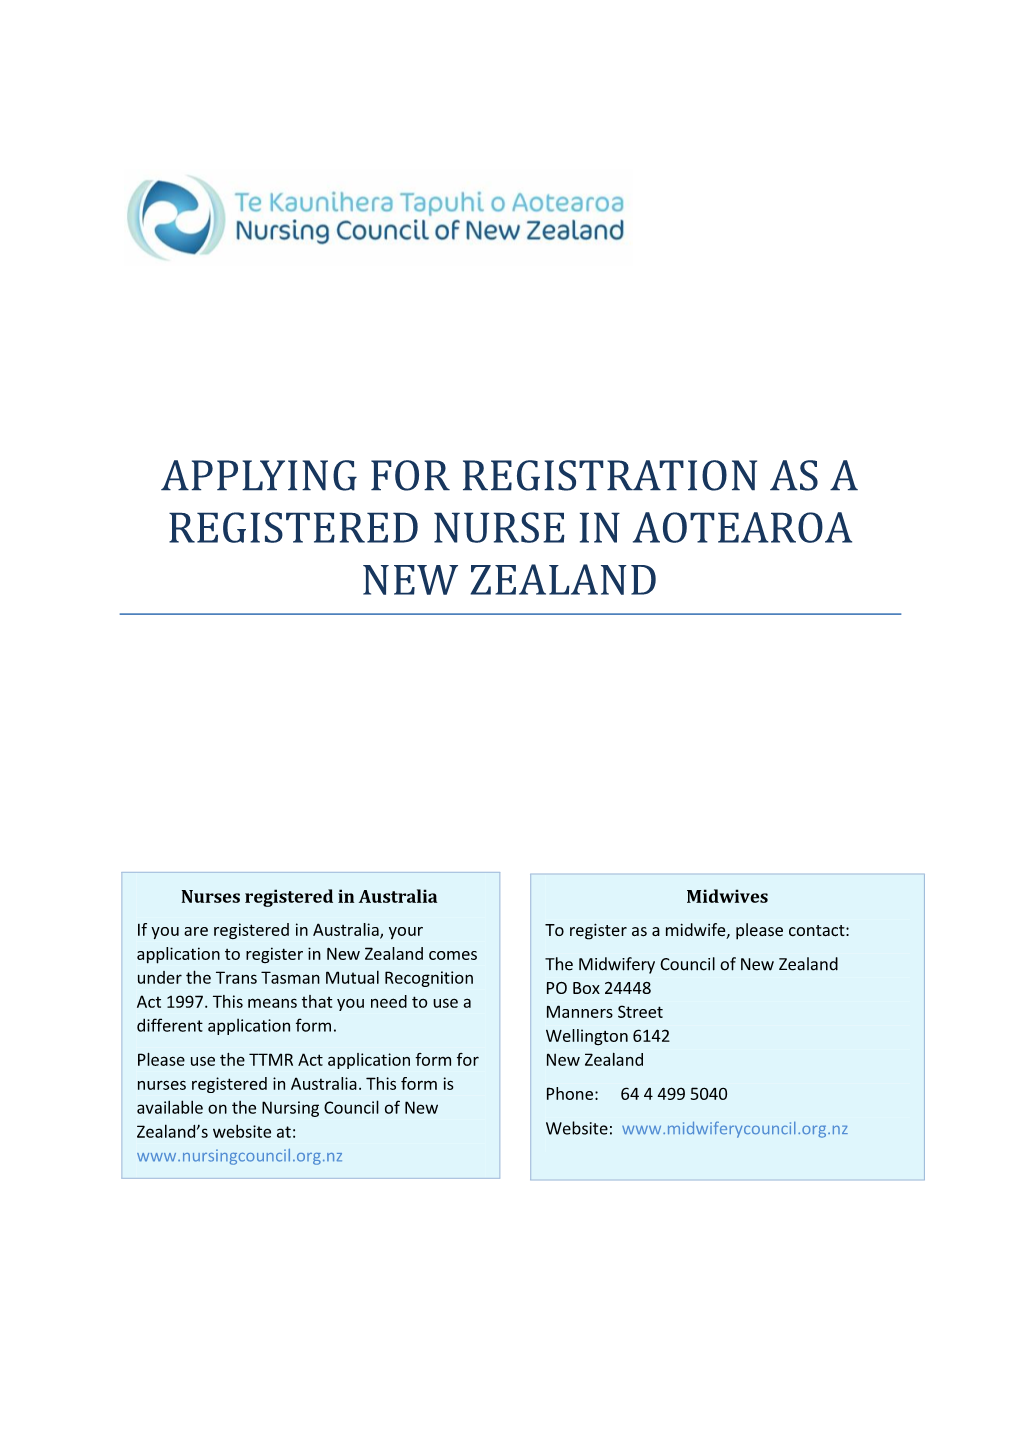 Applying for Registration As a Registered Nurse in Aotearoa New Zealand